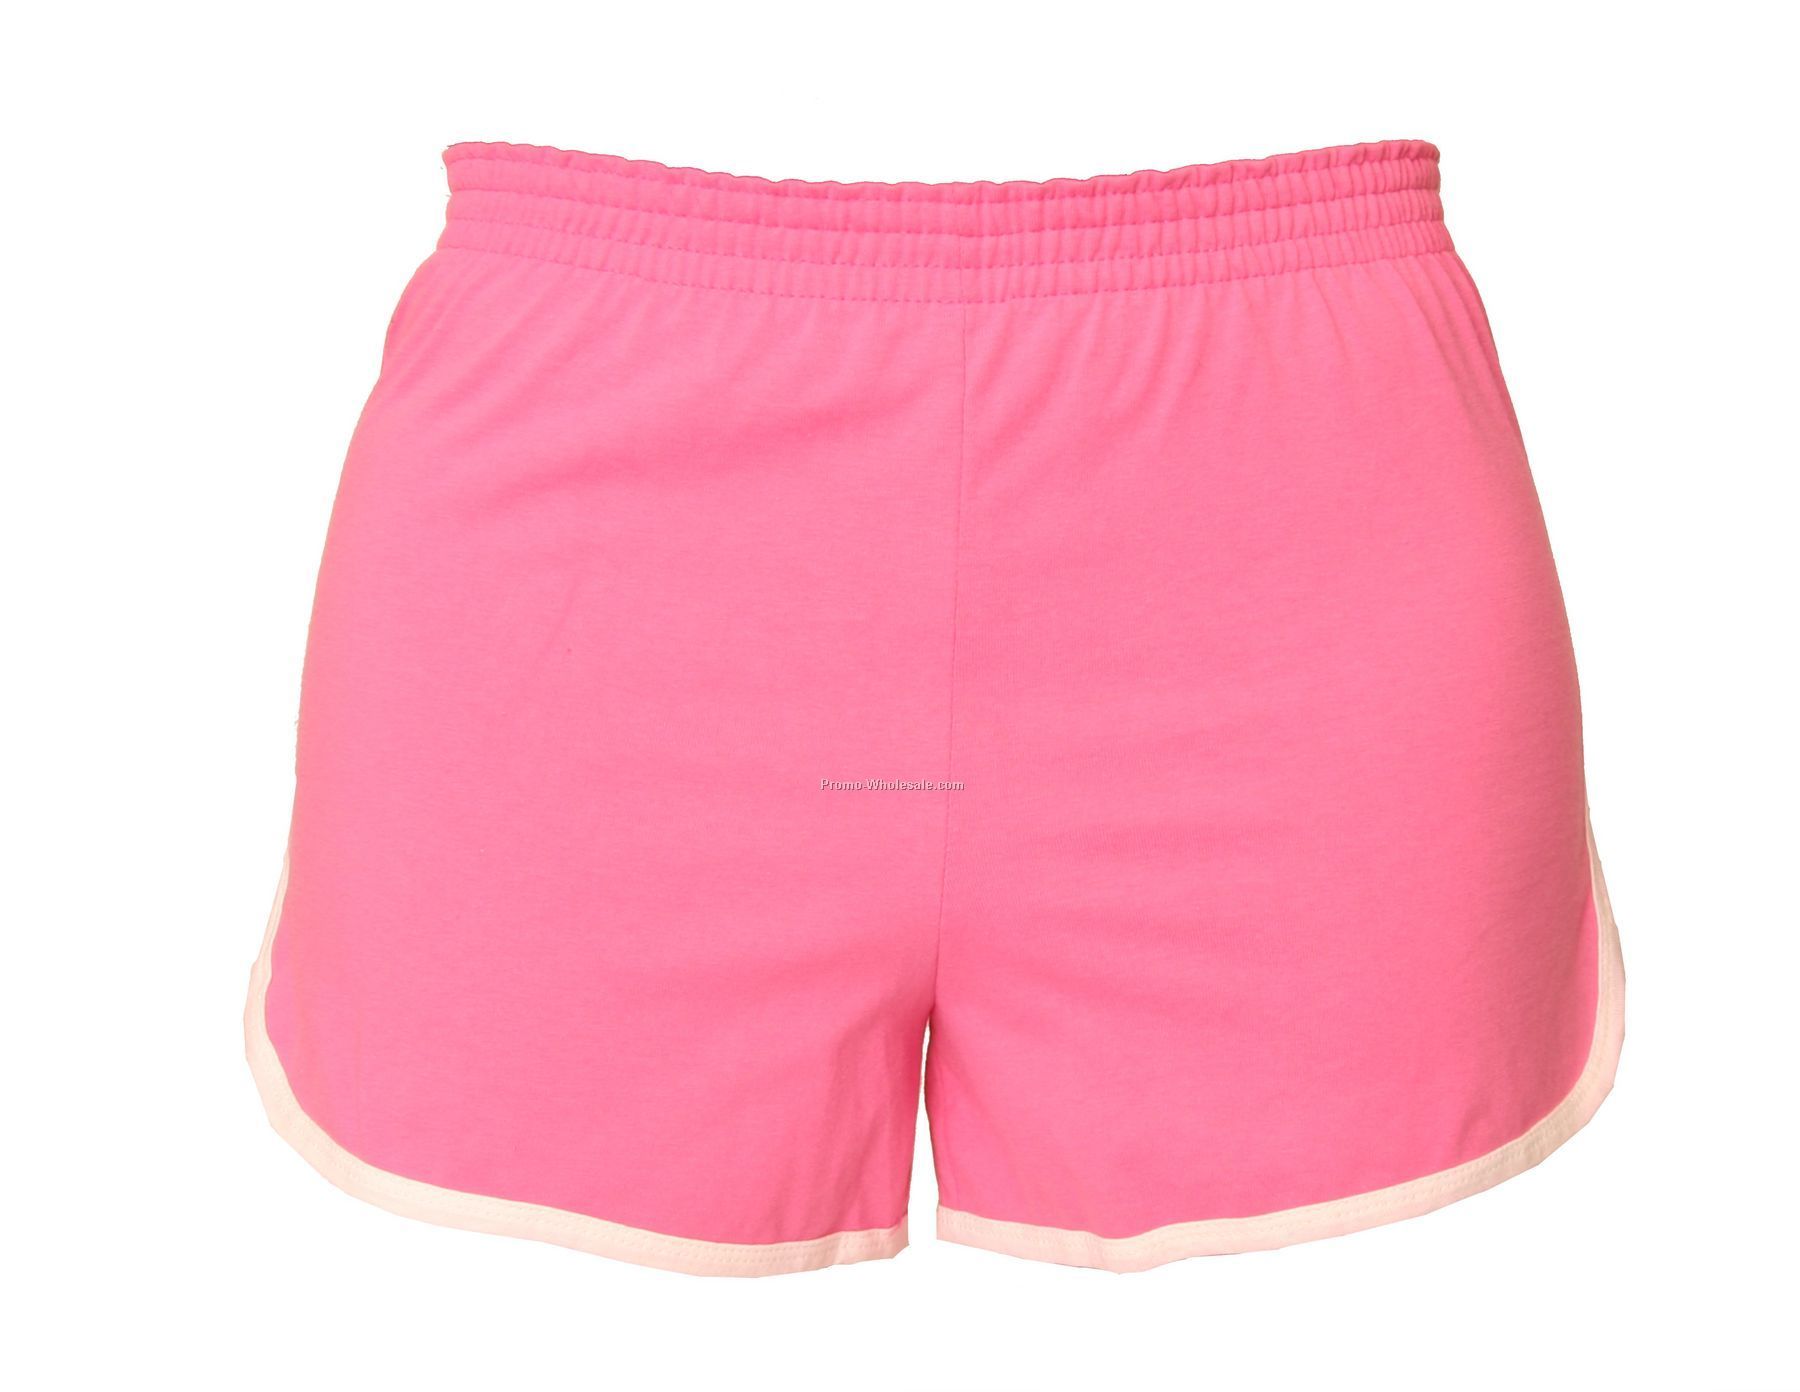 Adults' Pink Retro Shorts (Xs-xl)